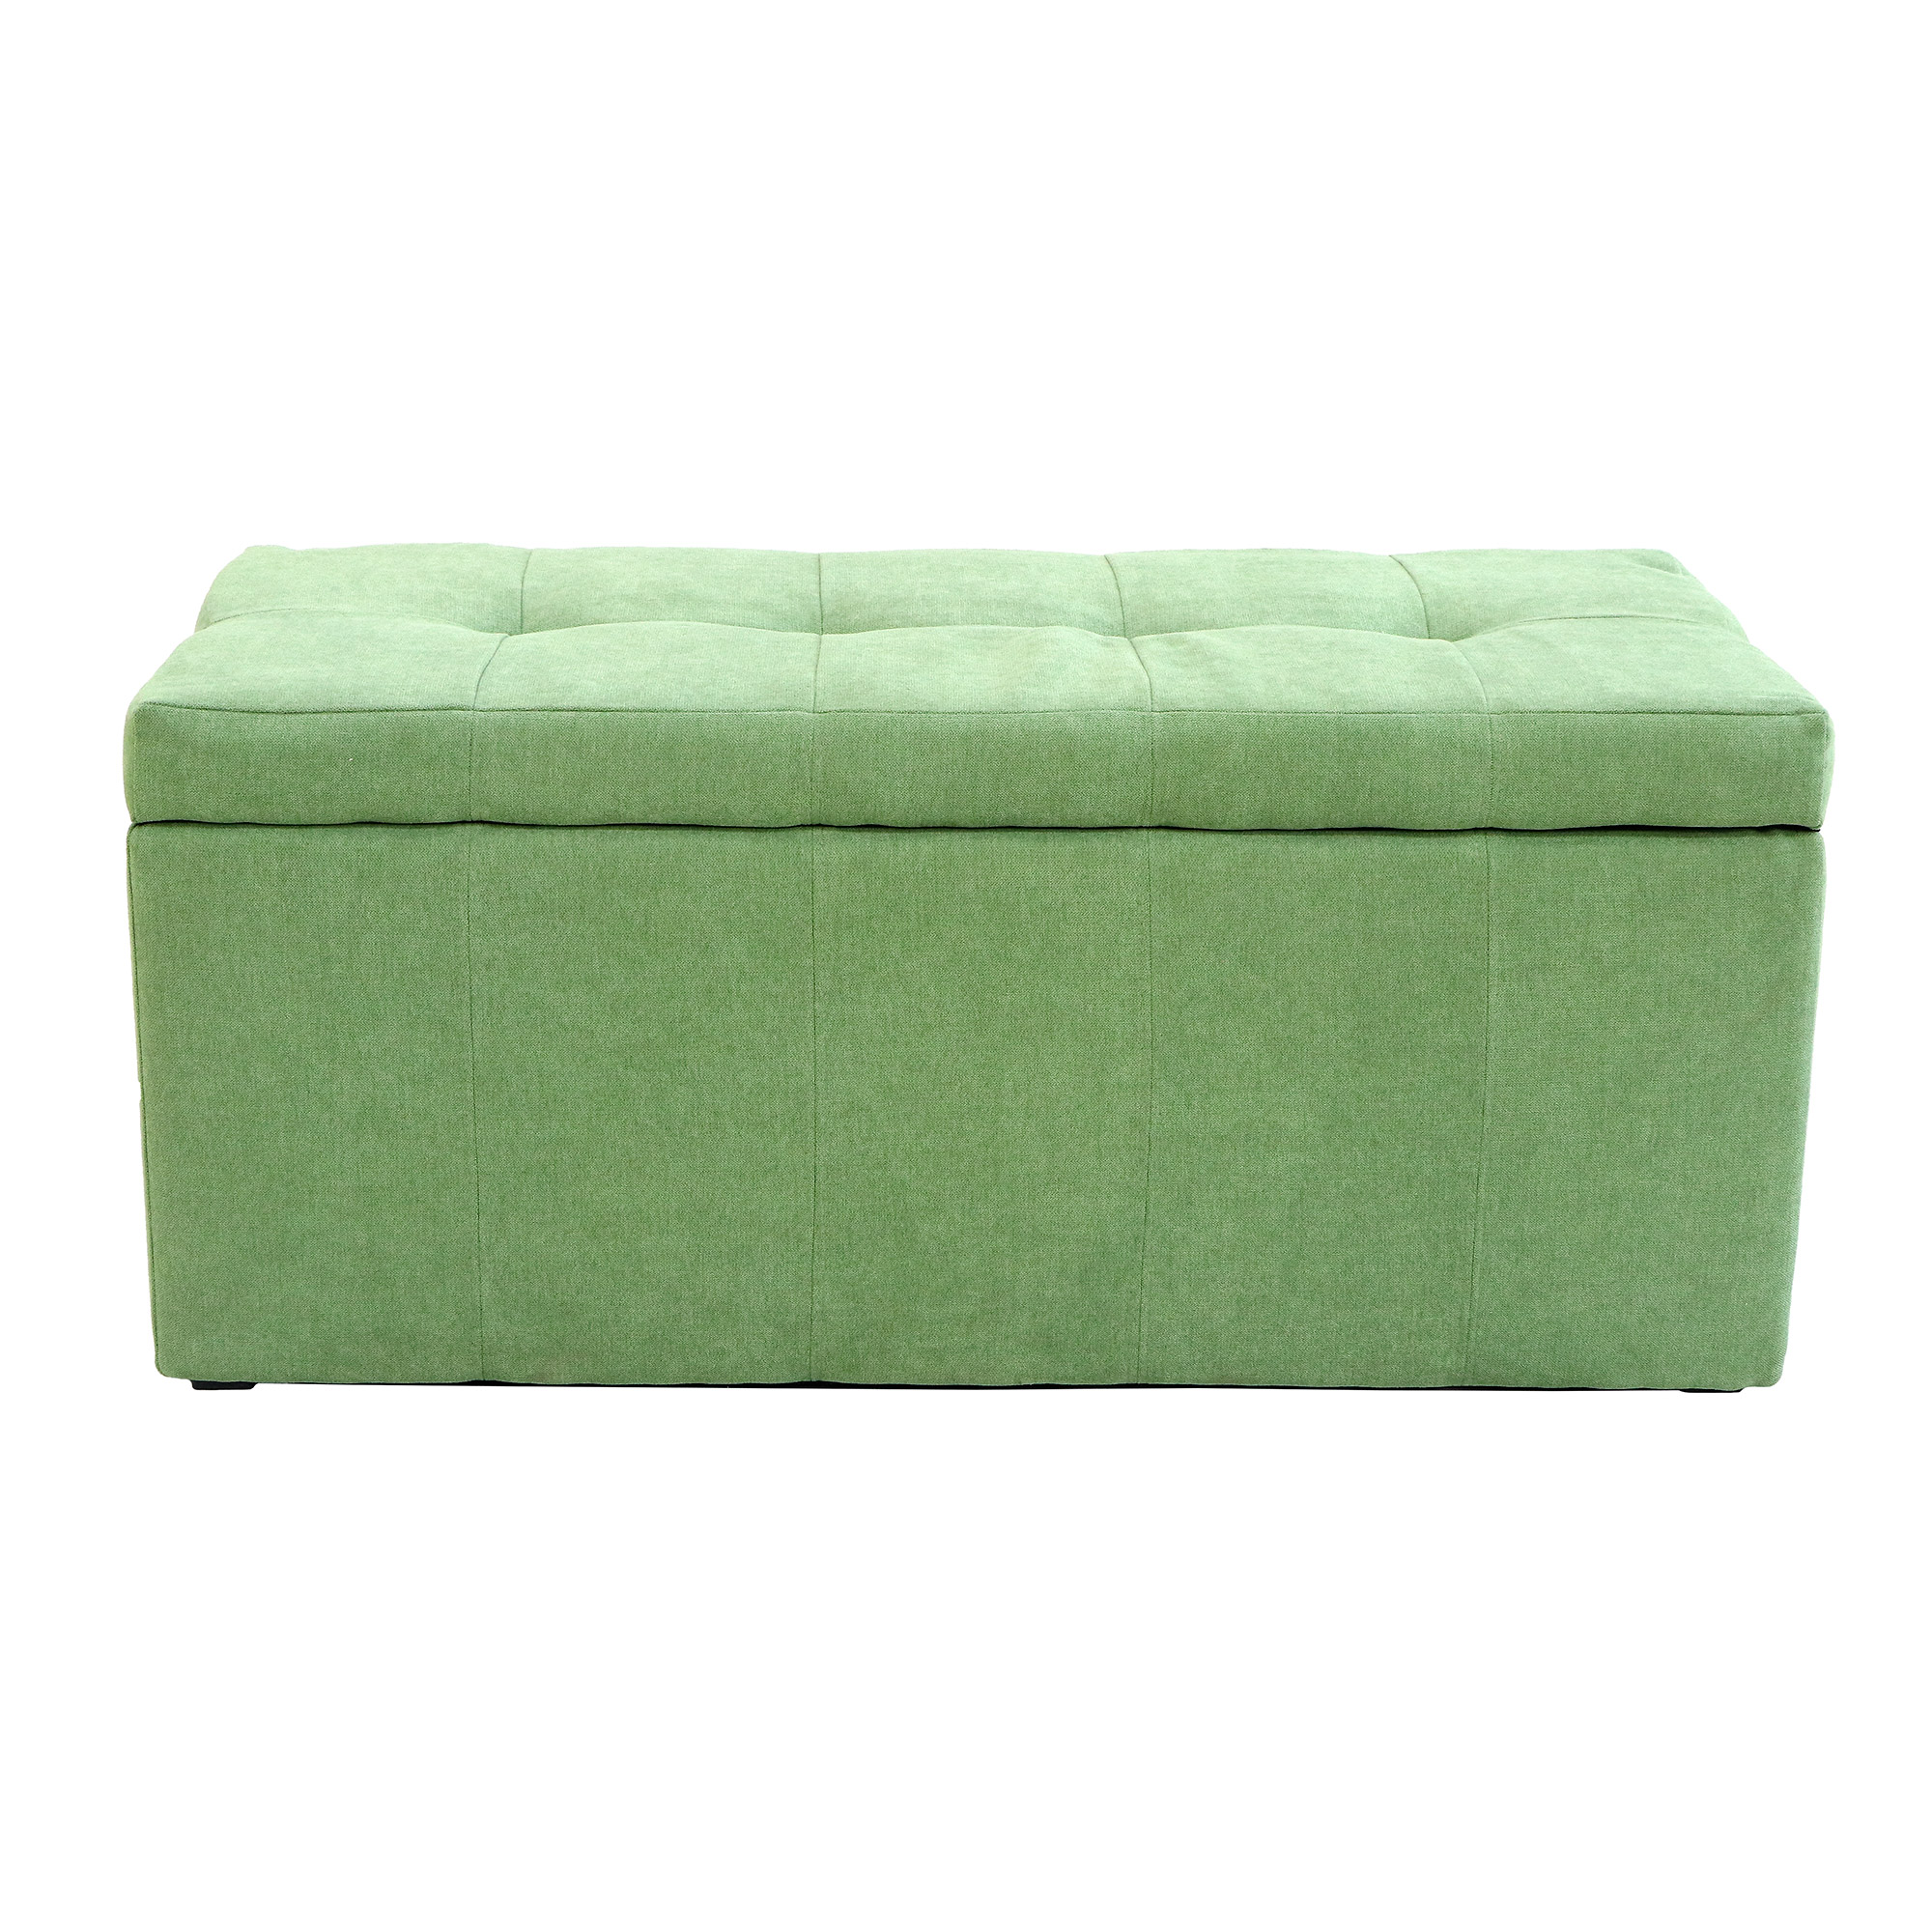 Банкетка Dreambag лонг зеленый велюр 100х46х46, размер 100х46х46 см - фото 2